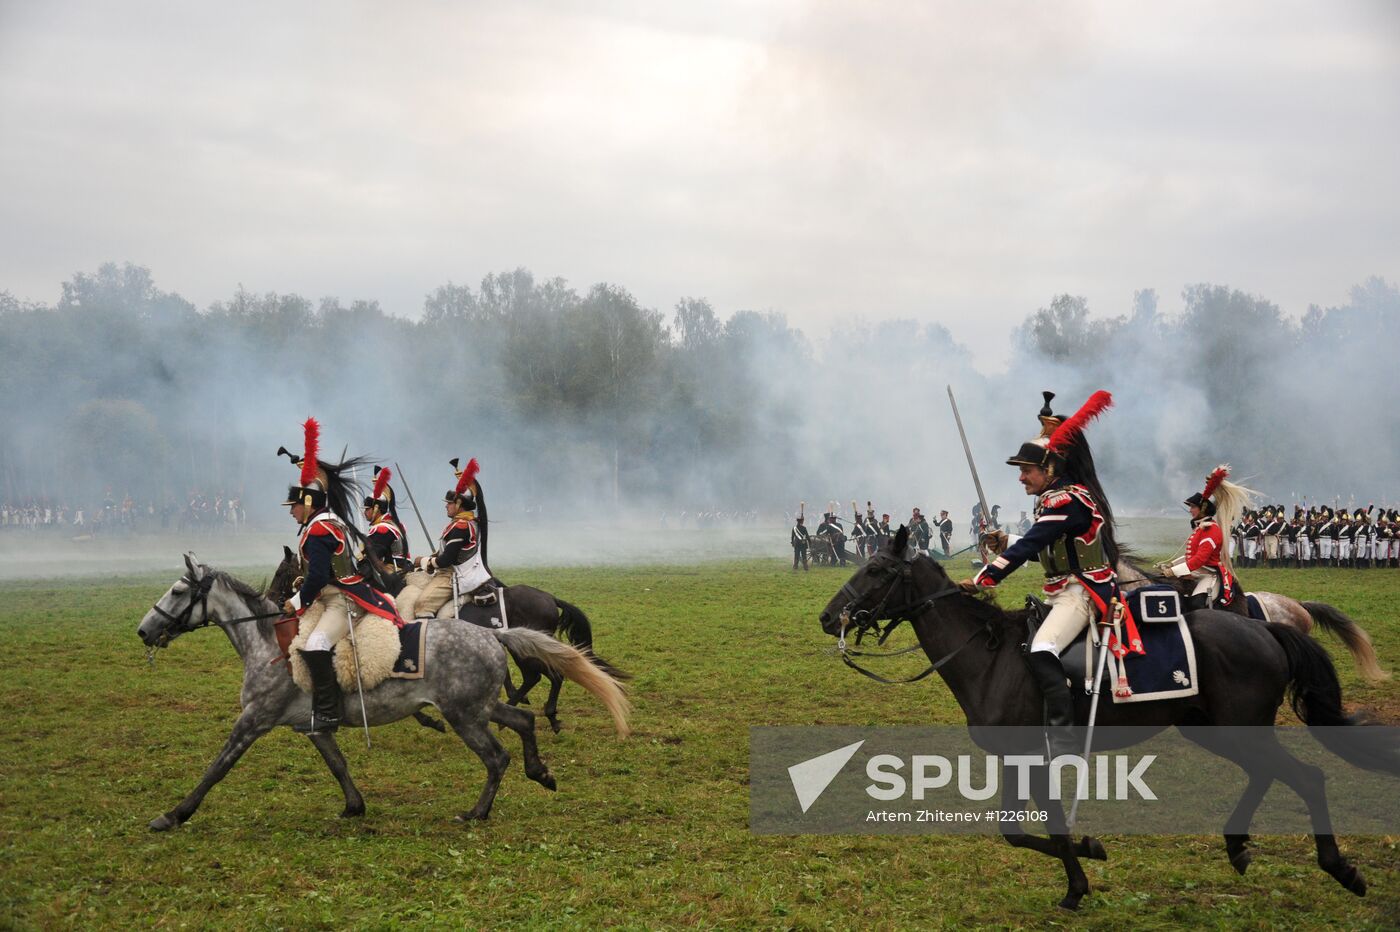 "Borodino Day" military-historical holiday